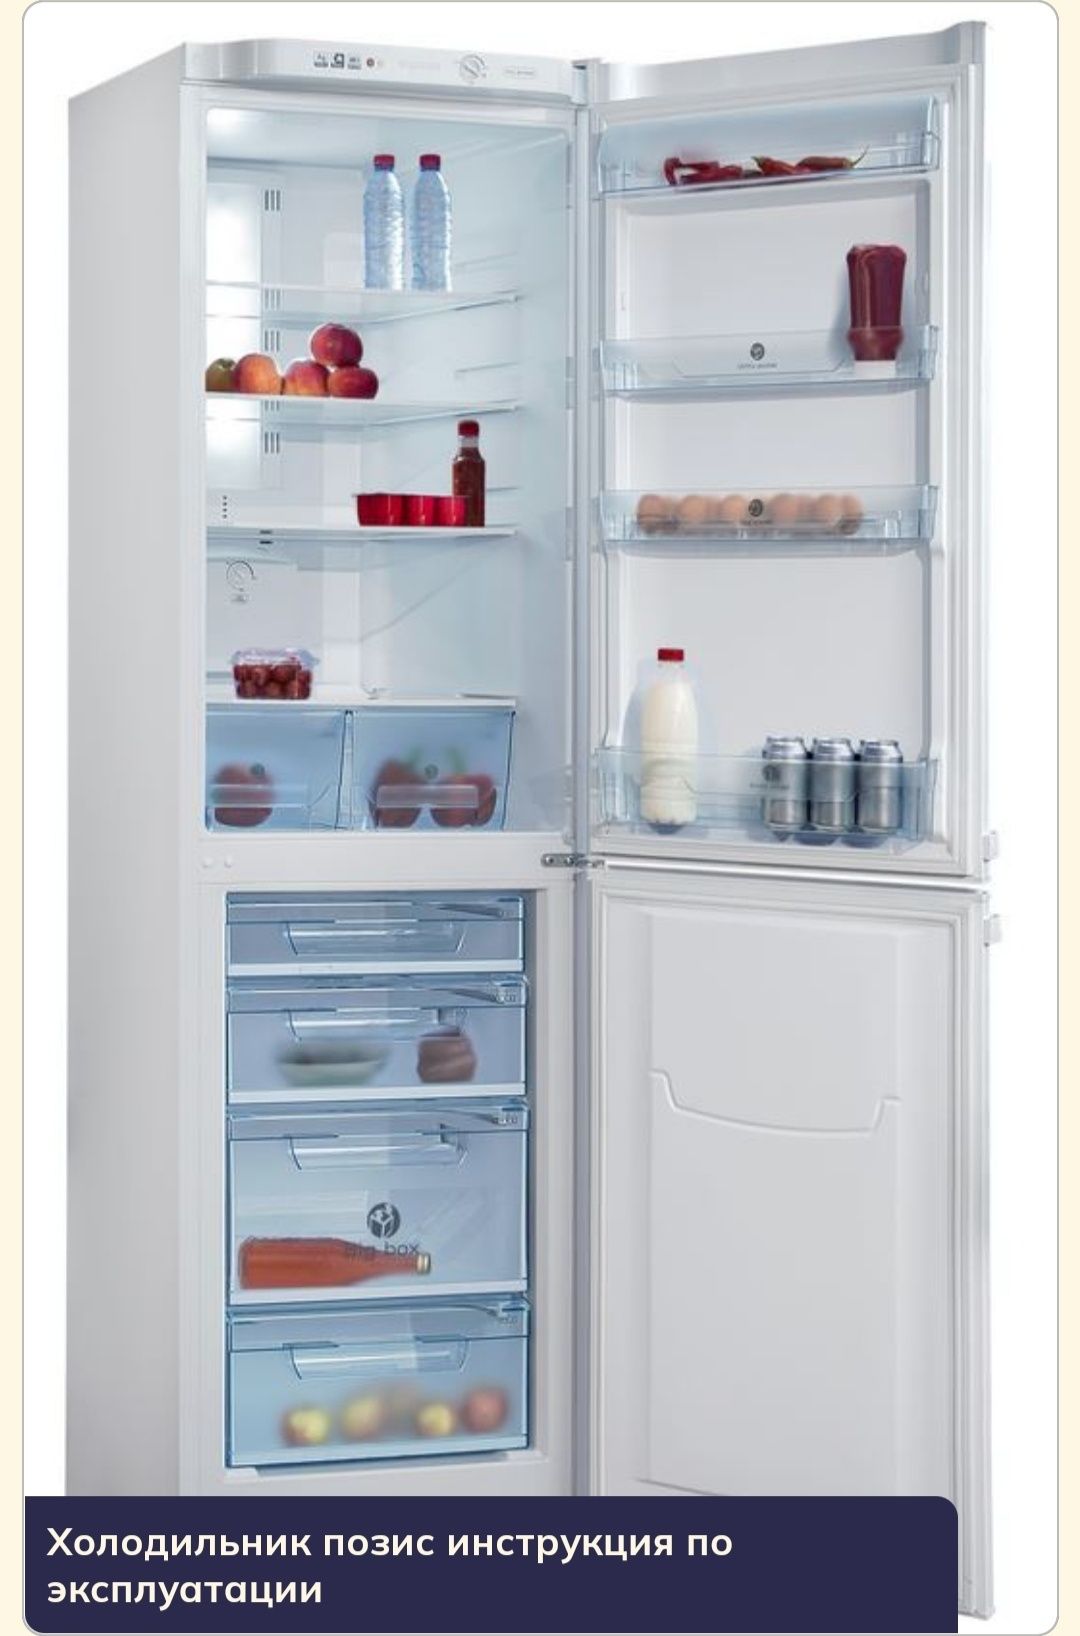 Ремонт холодильников Holodilnik ustasi tez va sifatli 100% kafolat